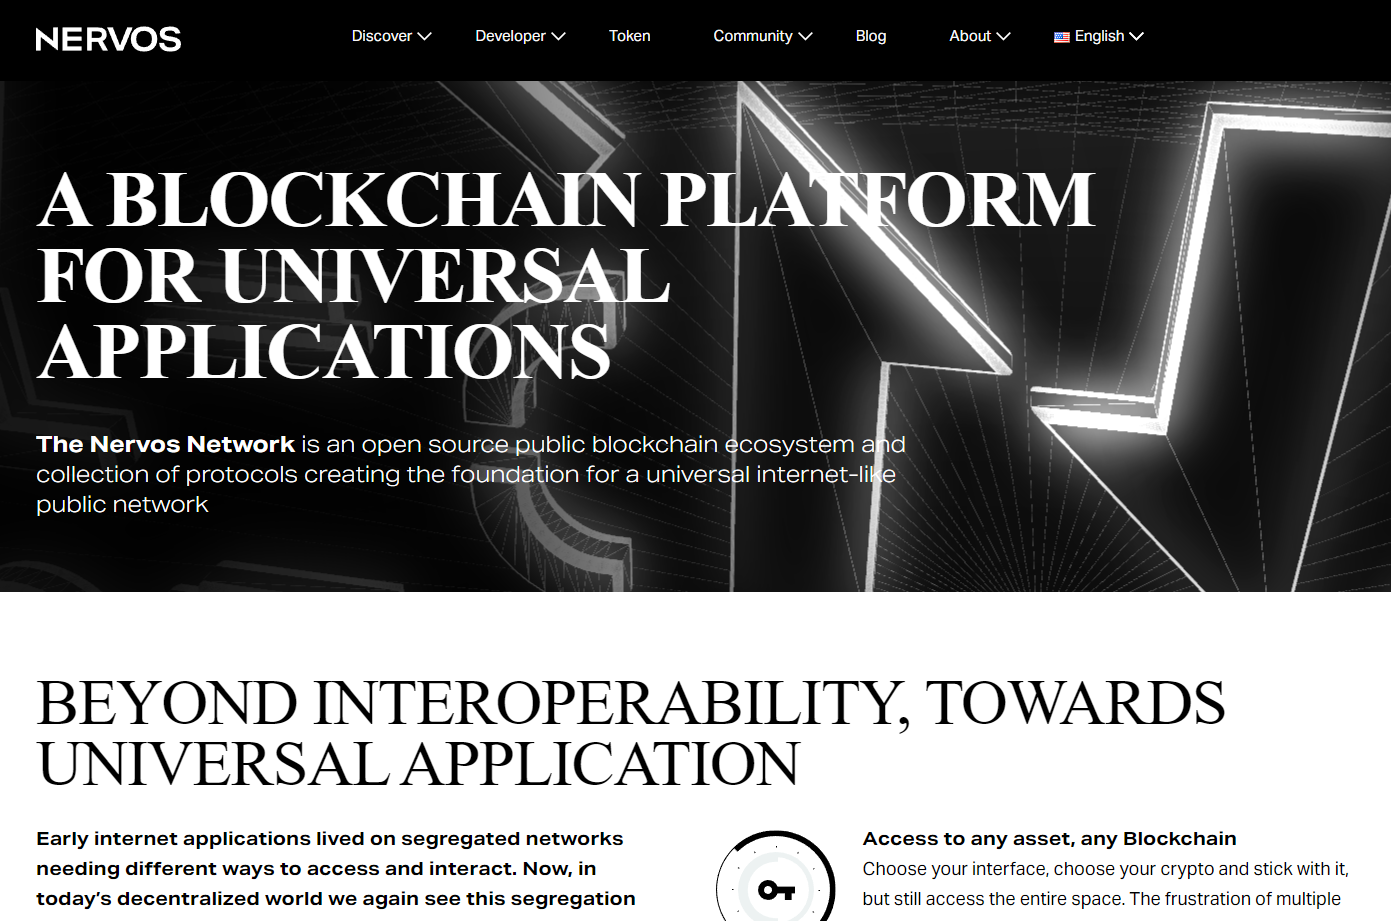 nervos network interoperable blockchain platform